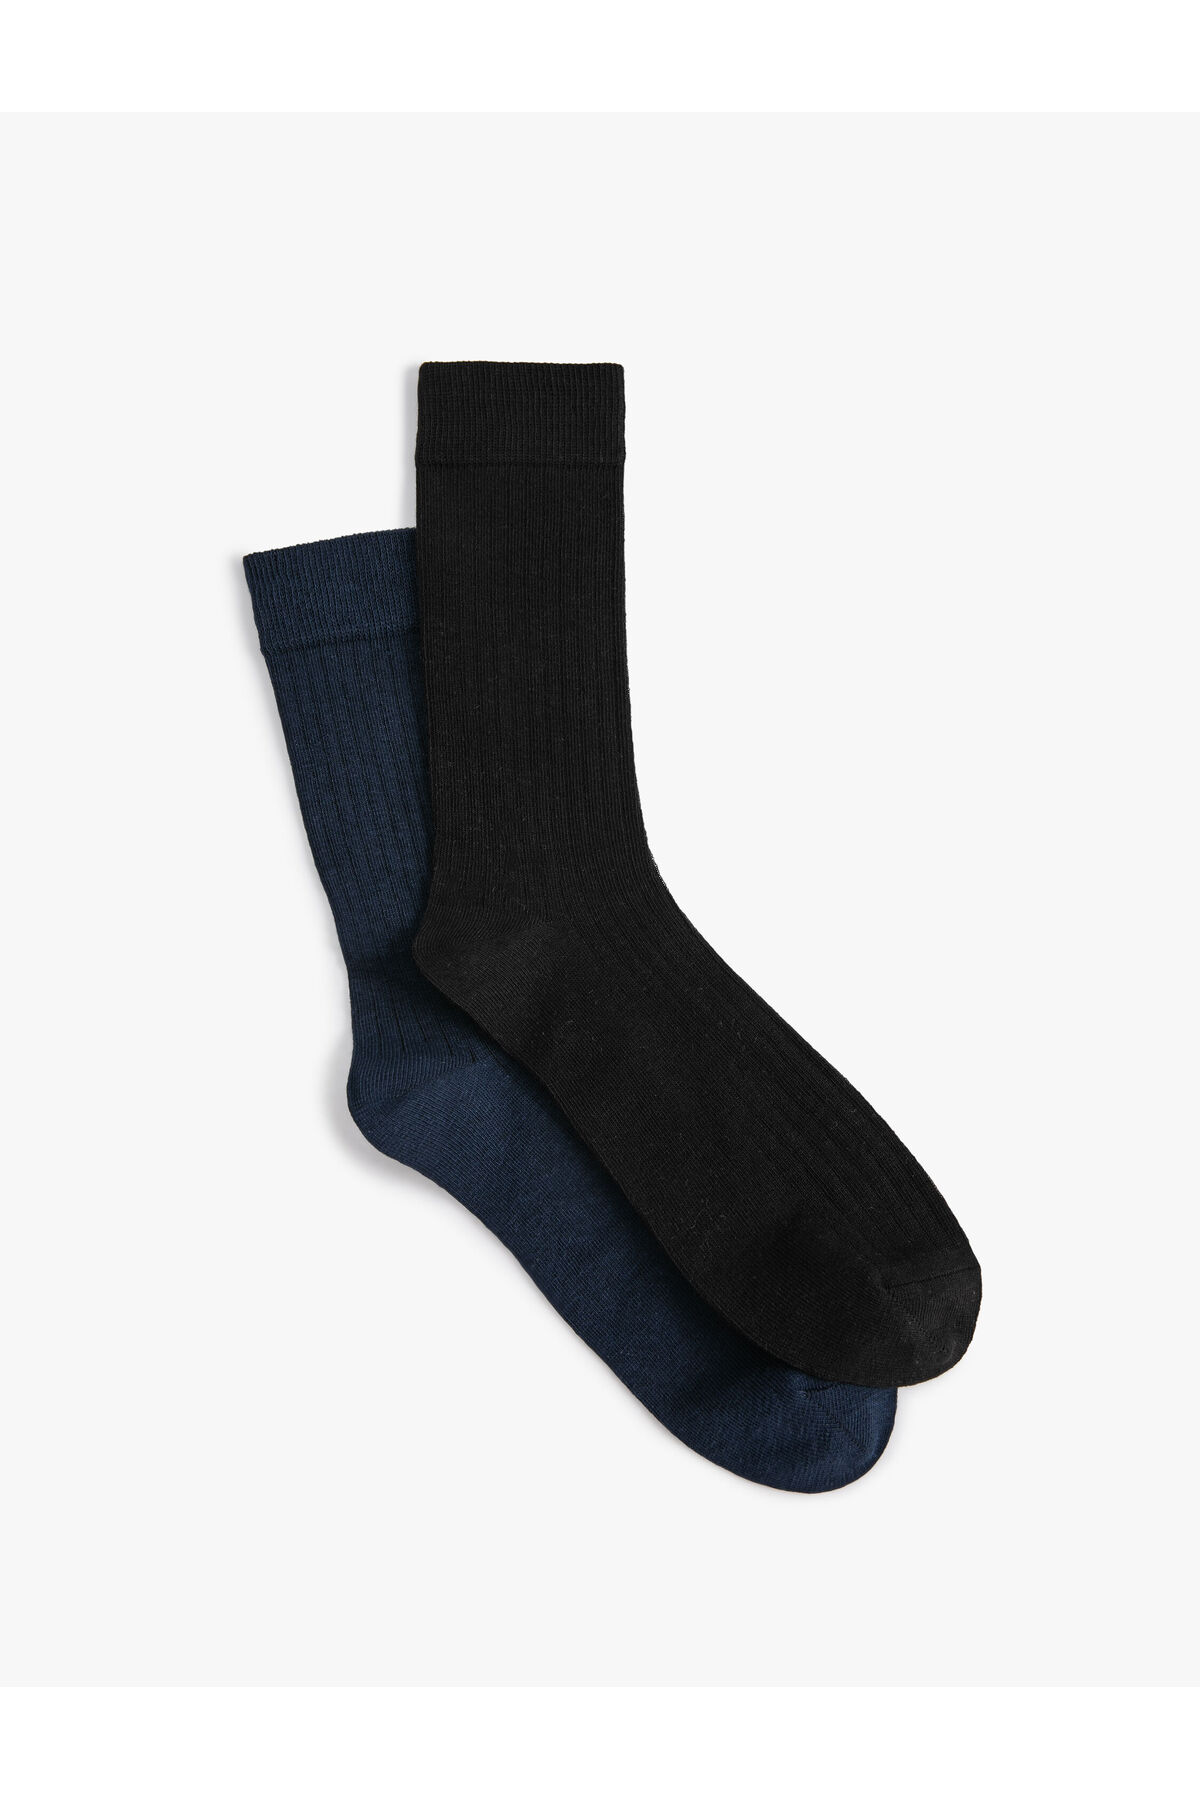 Koton Set of 2 Socks Multi Color